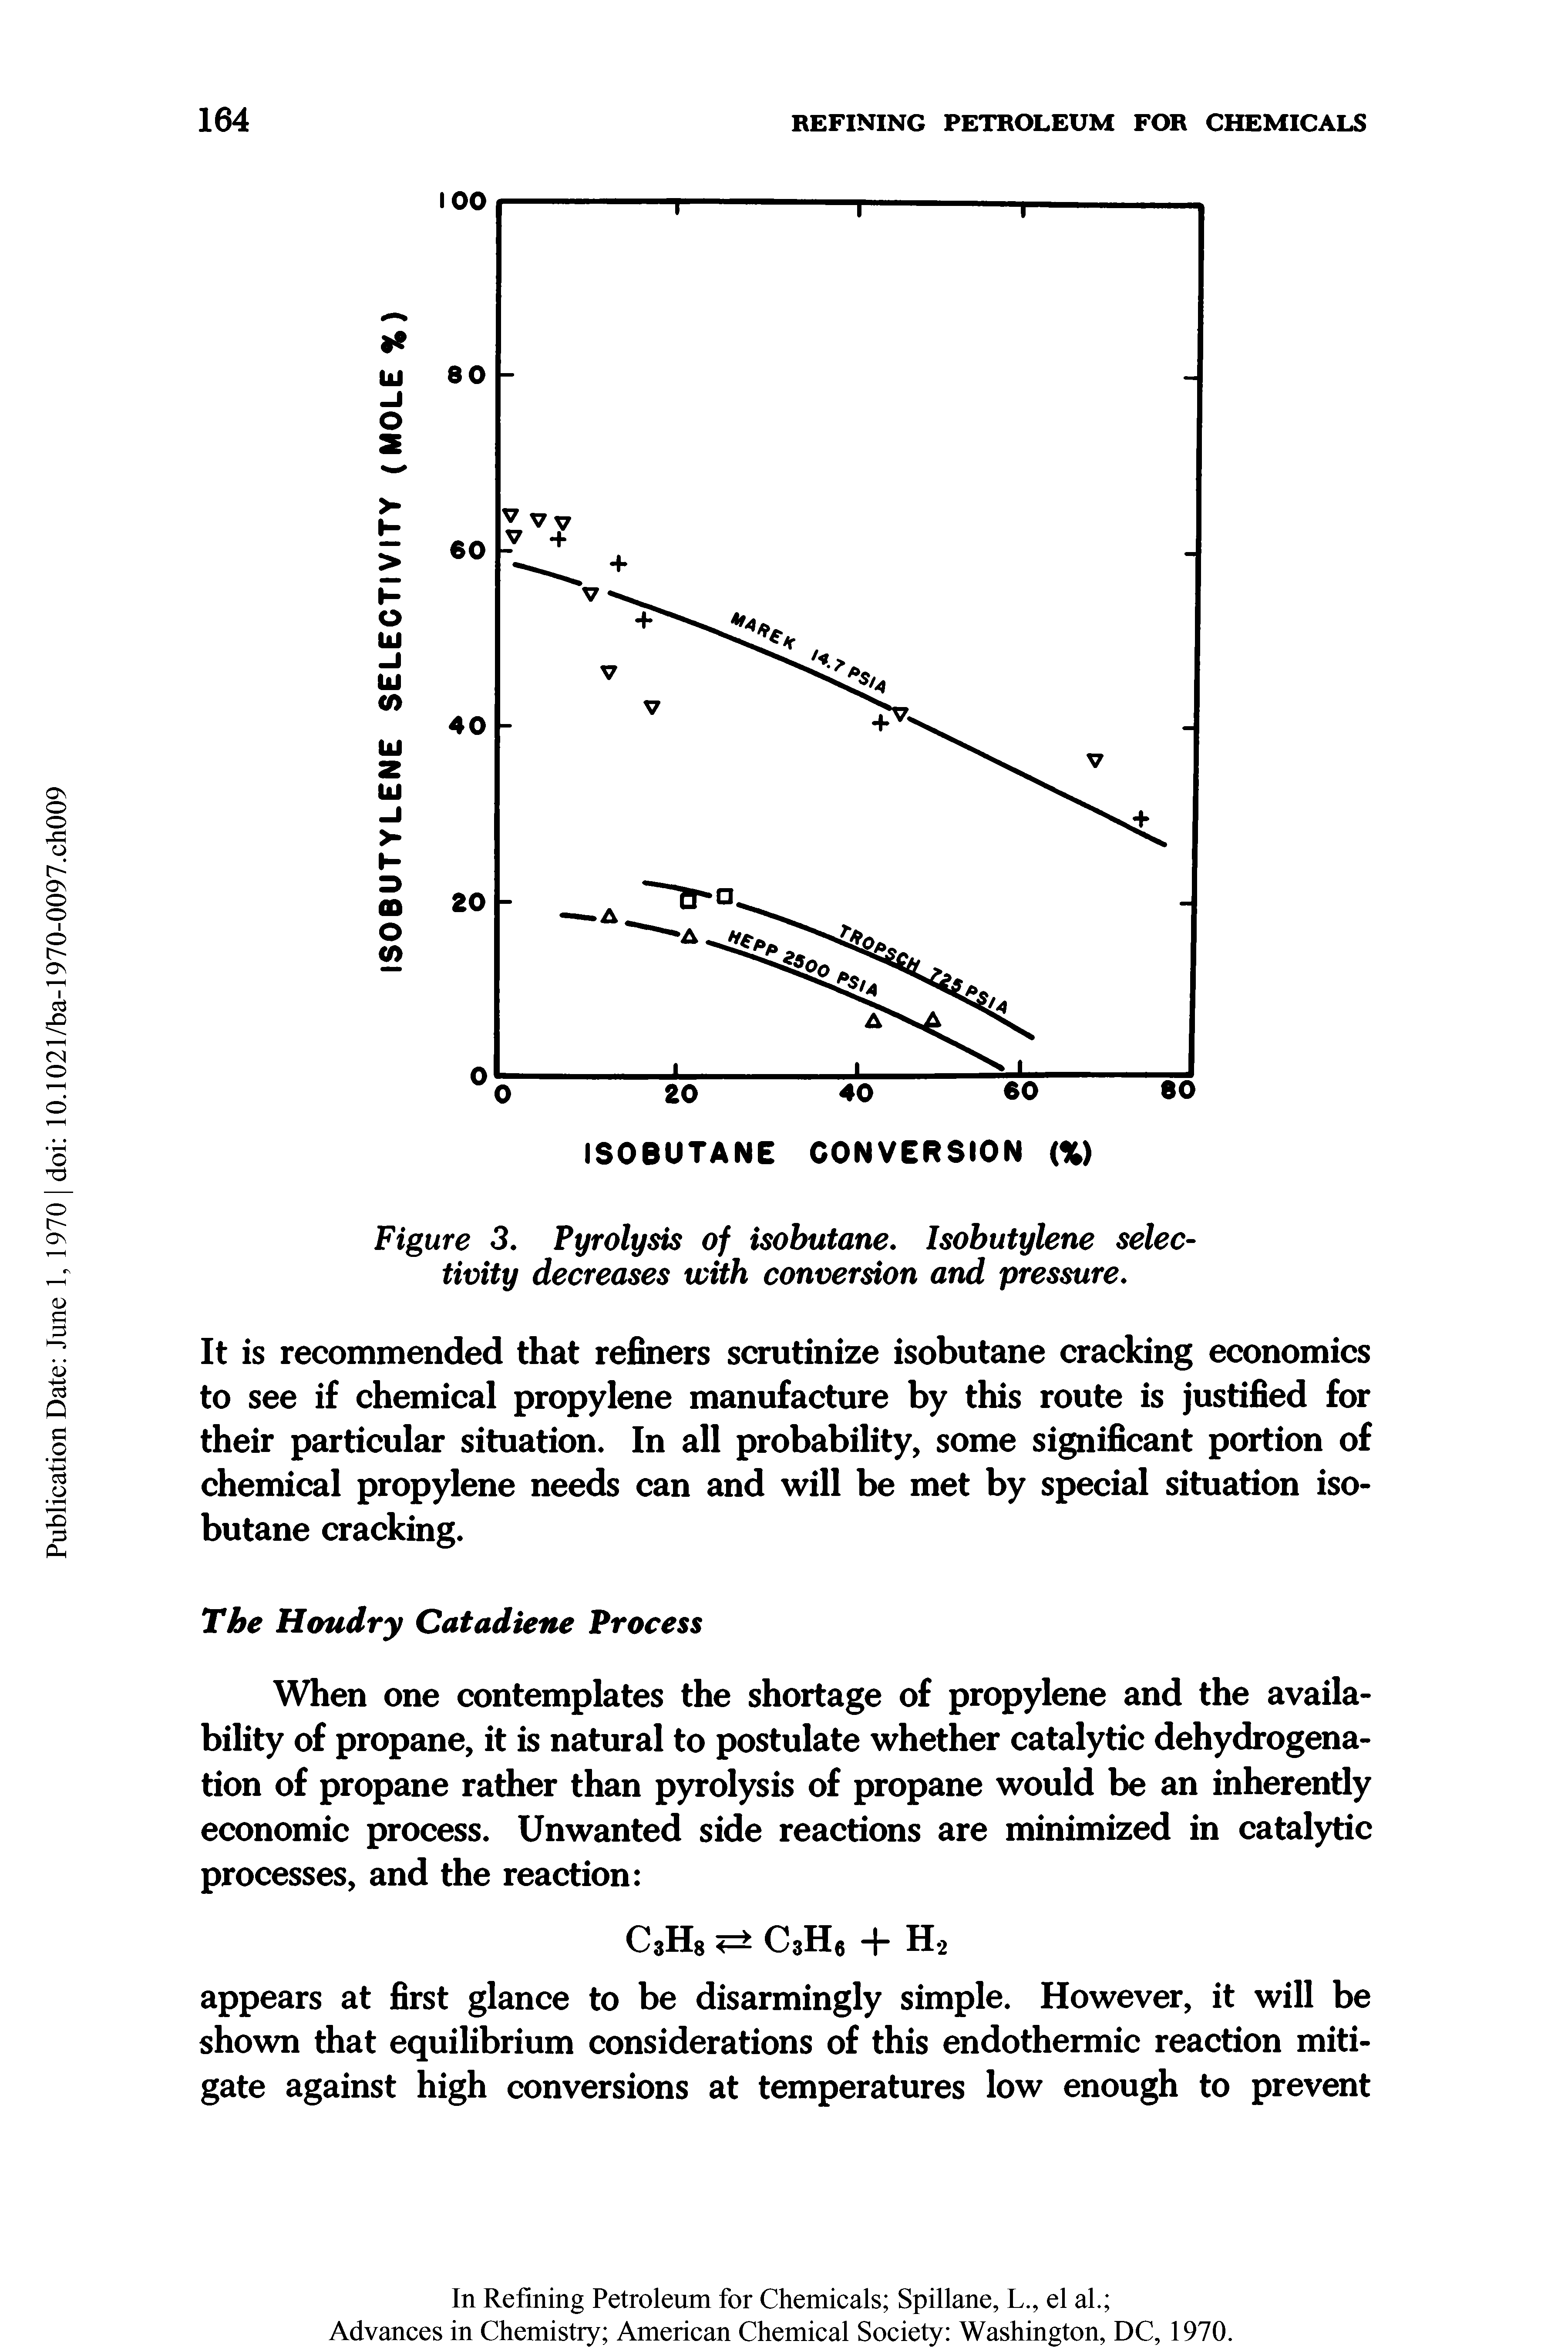 Figure 3. Pyrolysis of isobutane. Isobutylene selectivity decreases with conversion and pressure.